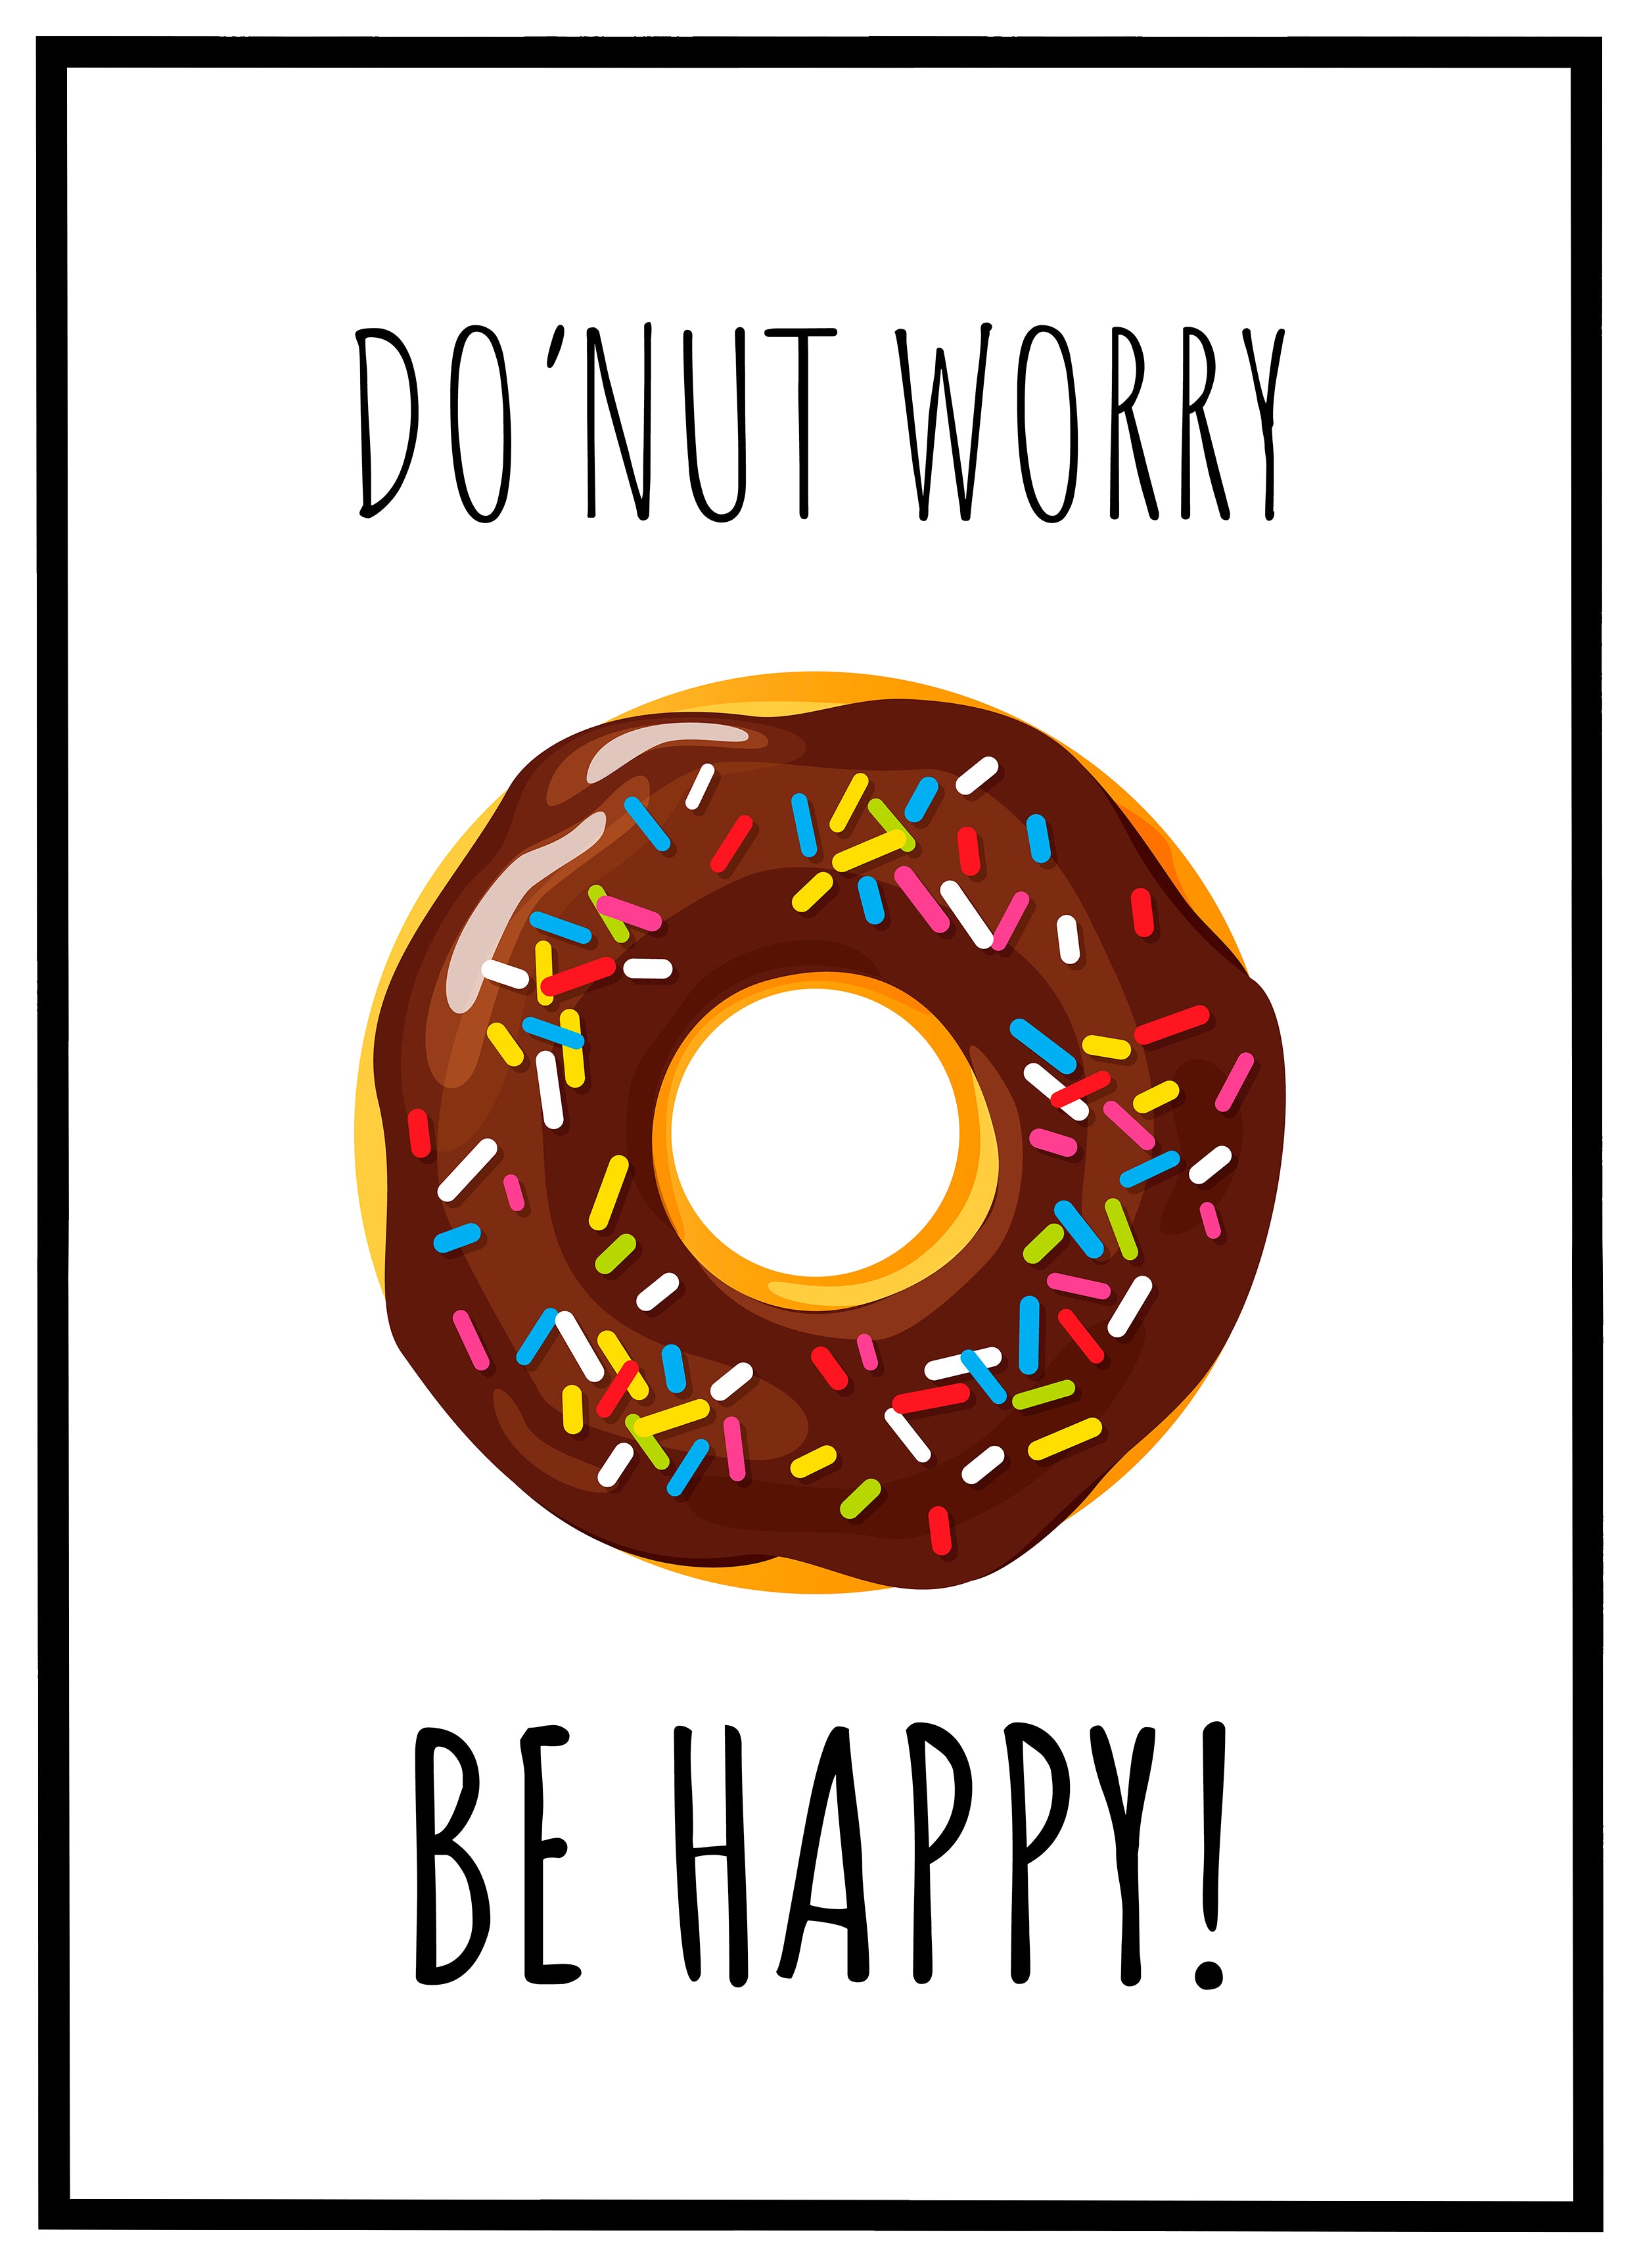 Donut Worry Be Happy - Plakat - Bareplakater.dk